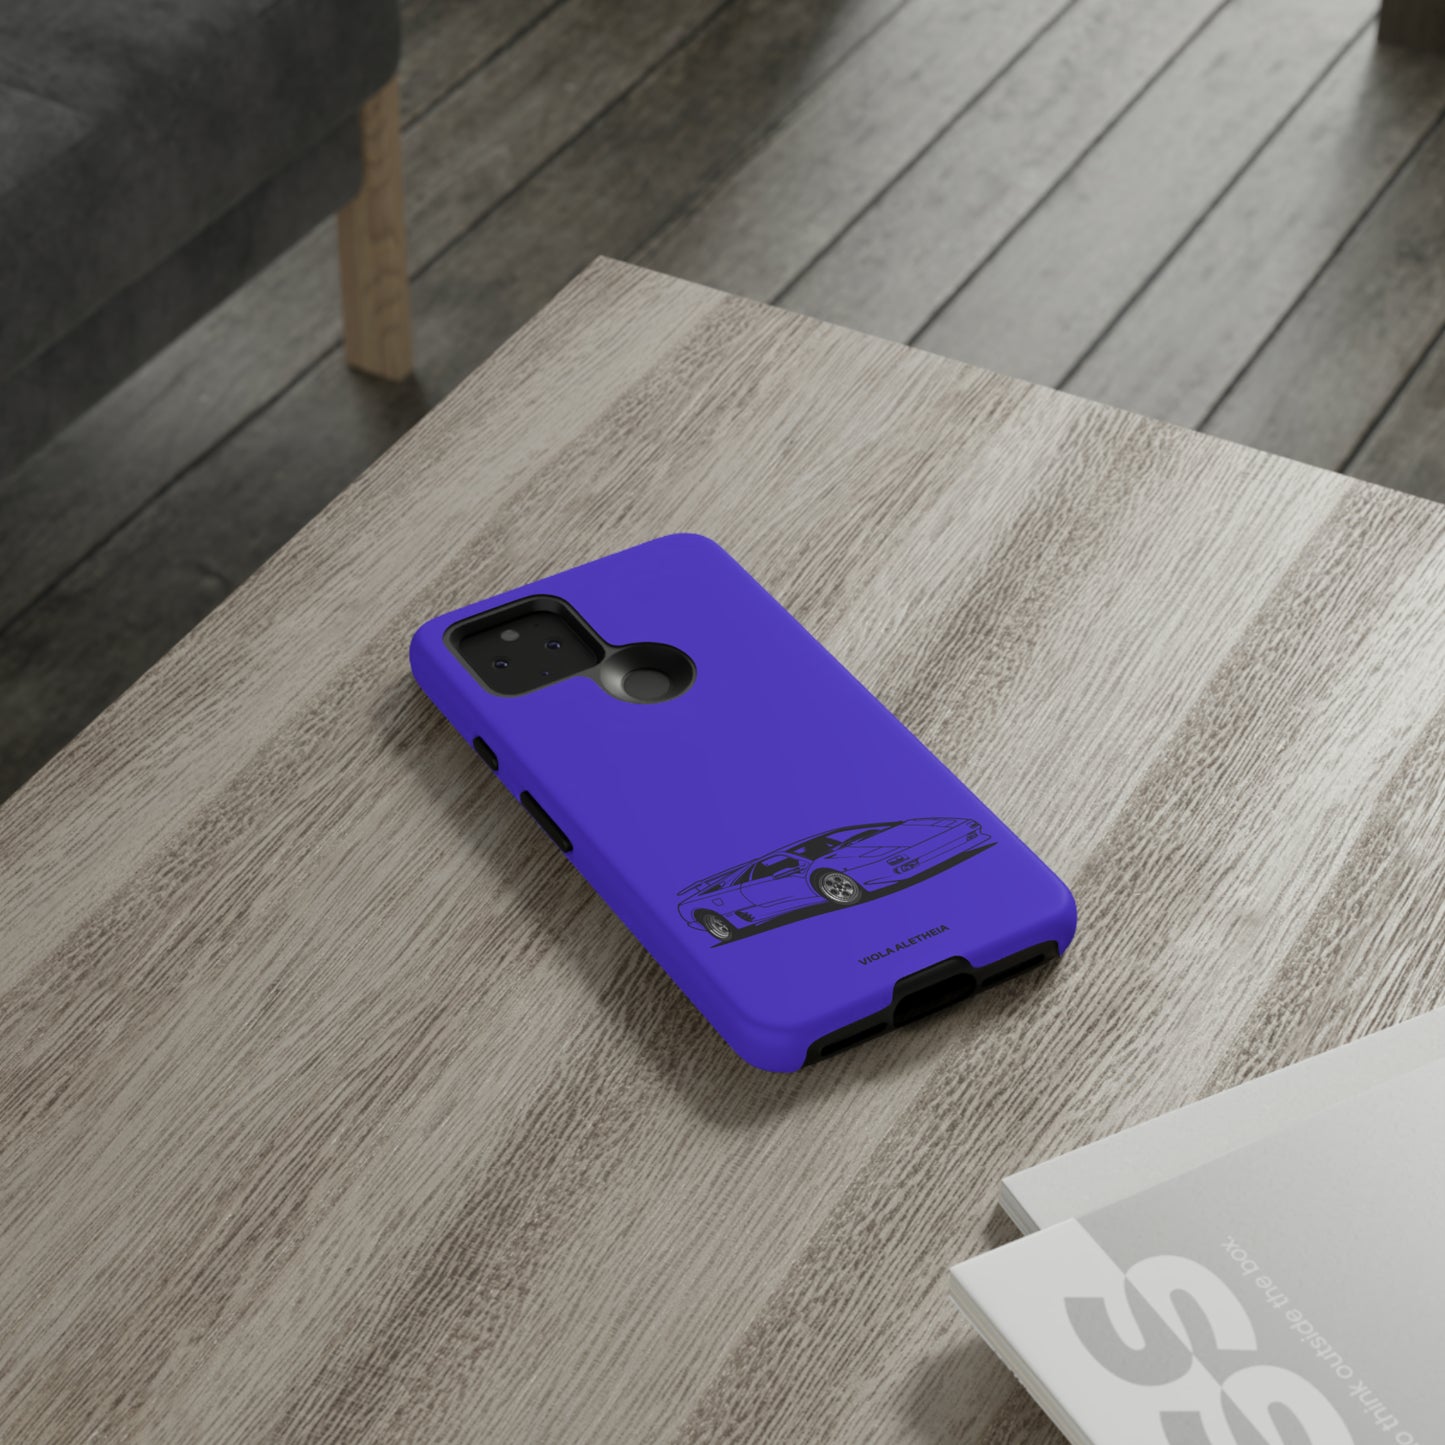 Viola Aletheia - Tough Case iPhone/Samsung/Pixel